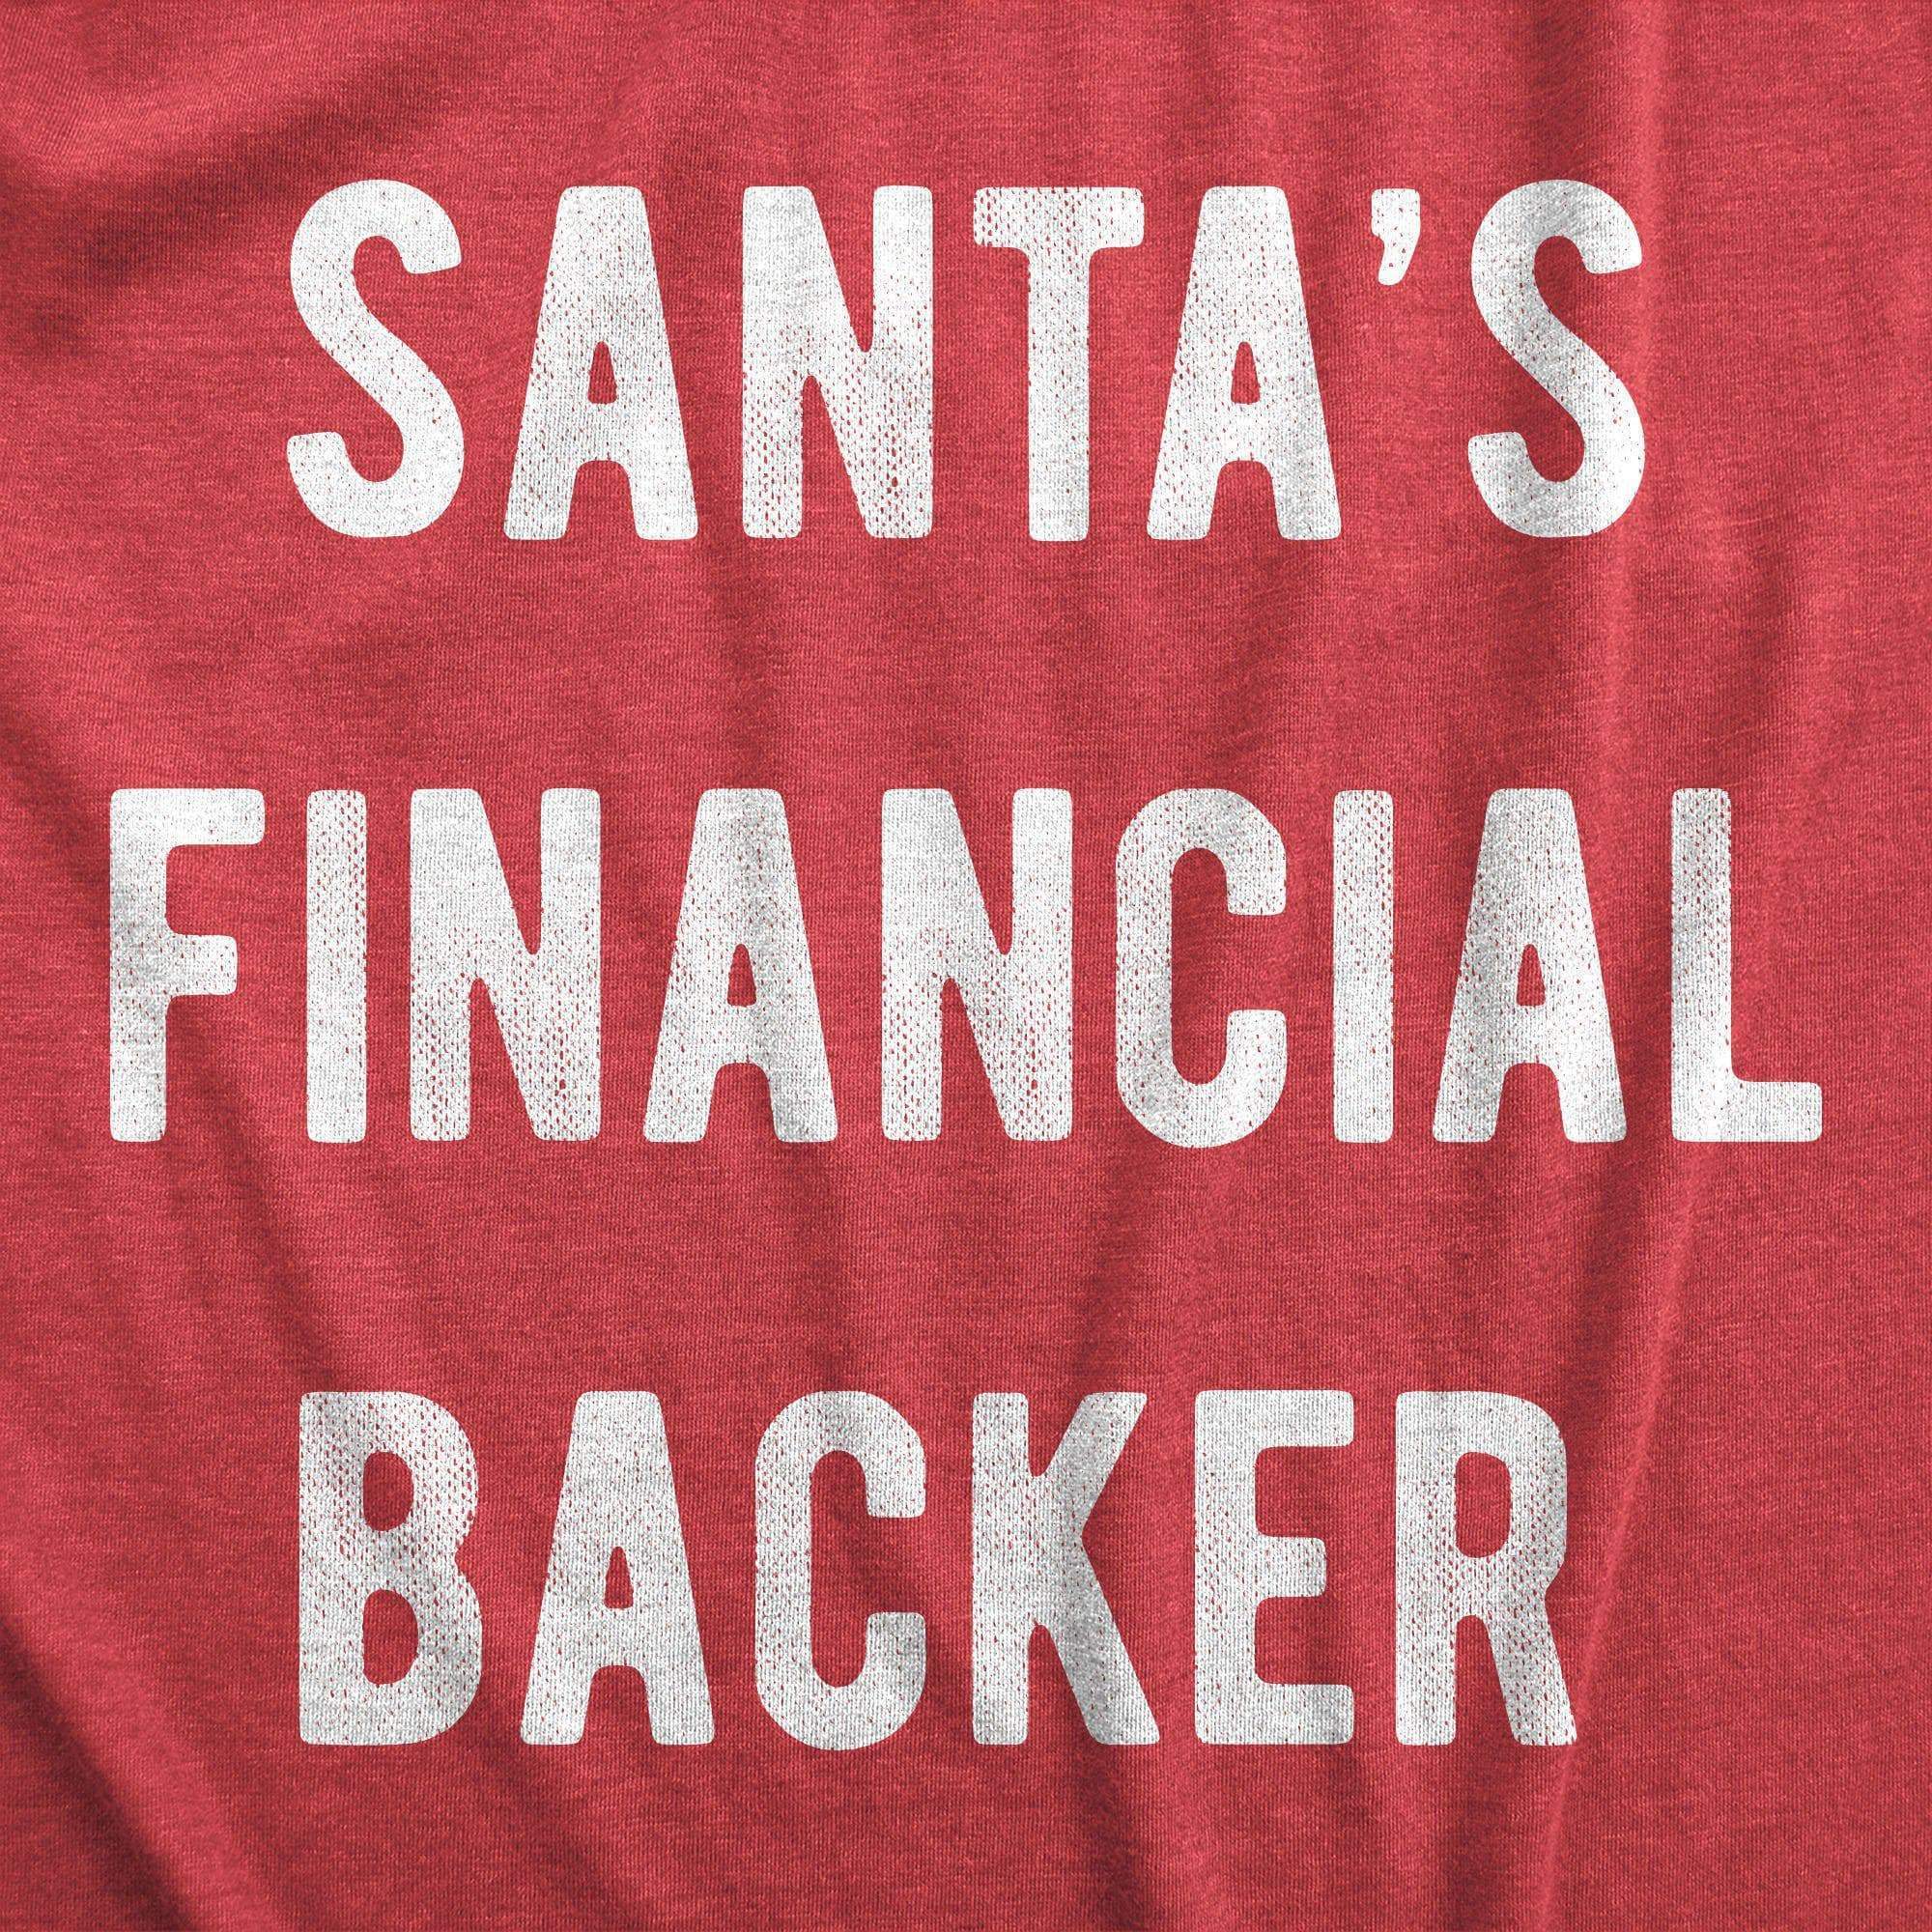 Santa's Financial Backer Women's Tshirt - Crazy Dog T-Shirts